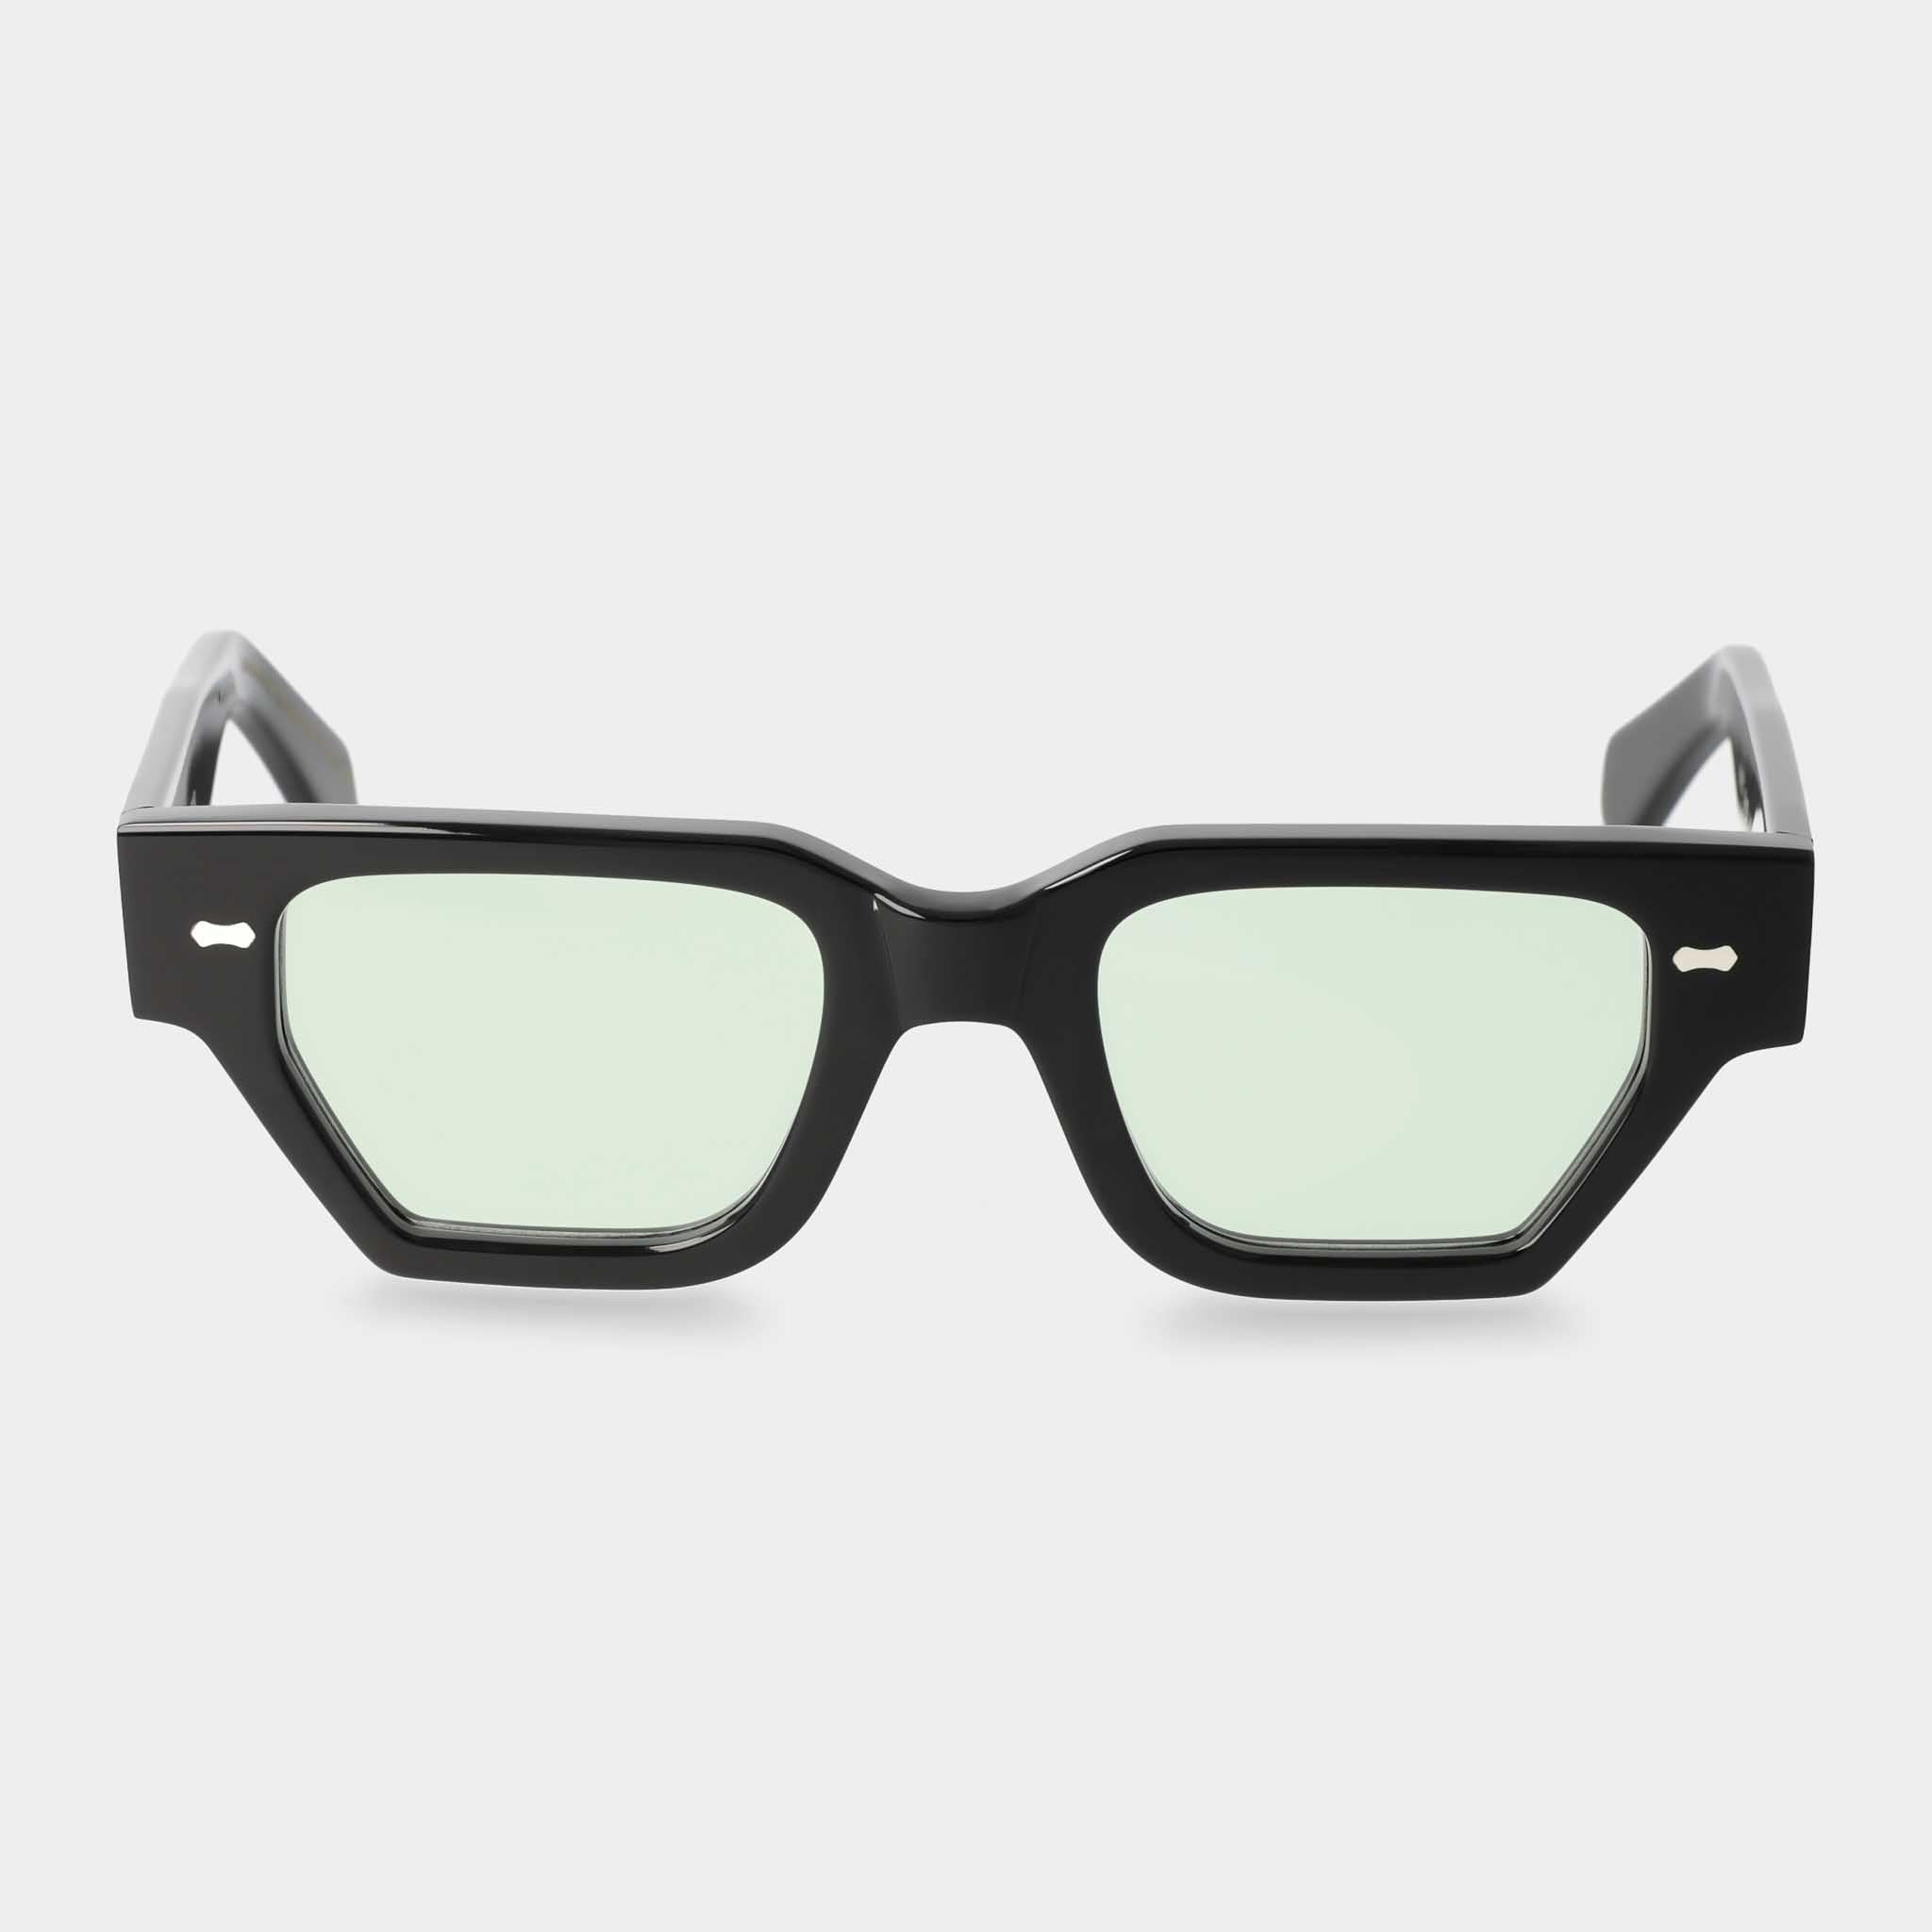 sunglasses-raso-eco-black-light-green-sustainable-tbd-eyewear-front